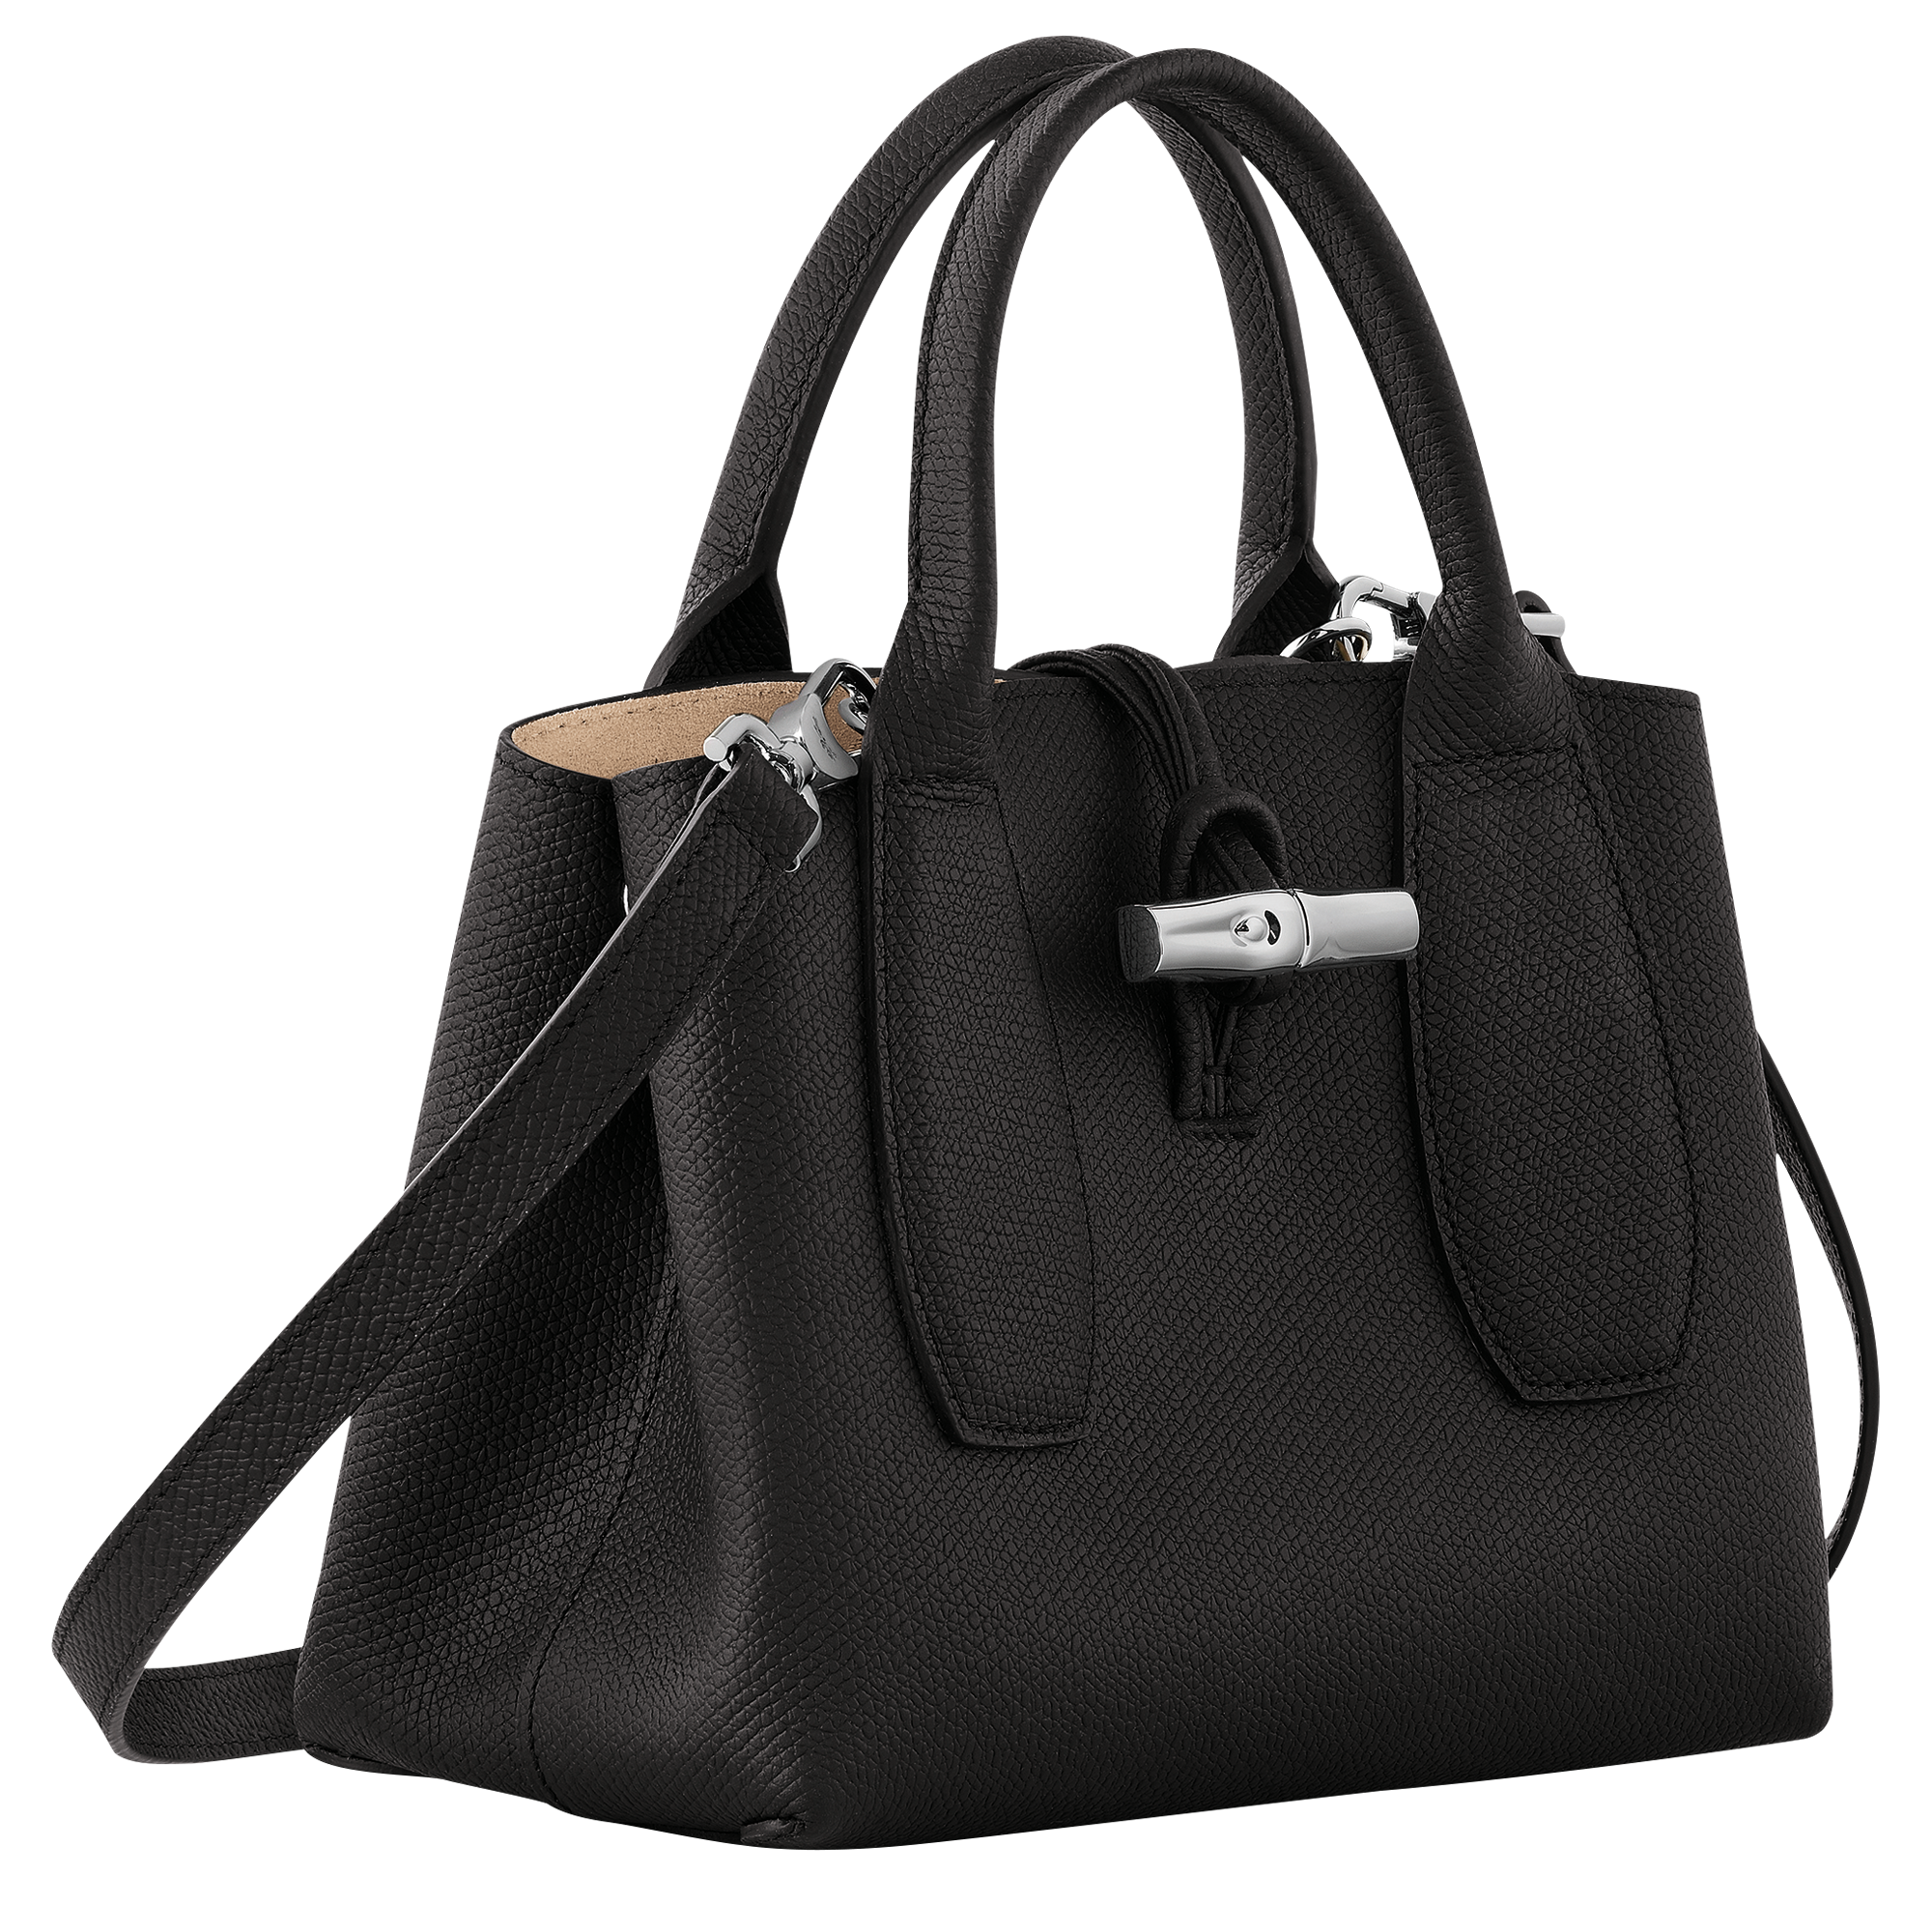 Longchamp Roseau Top Handle Leather Tote Bag Handbag Black Made in France